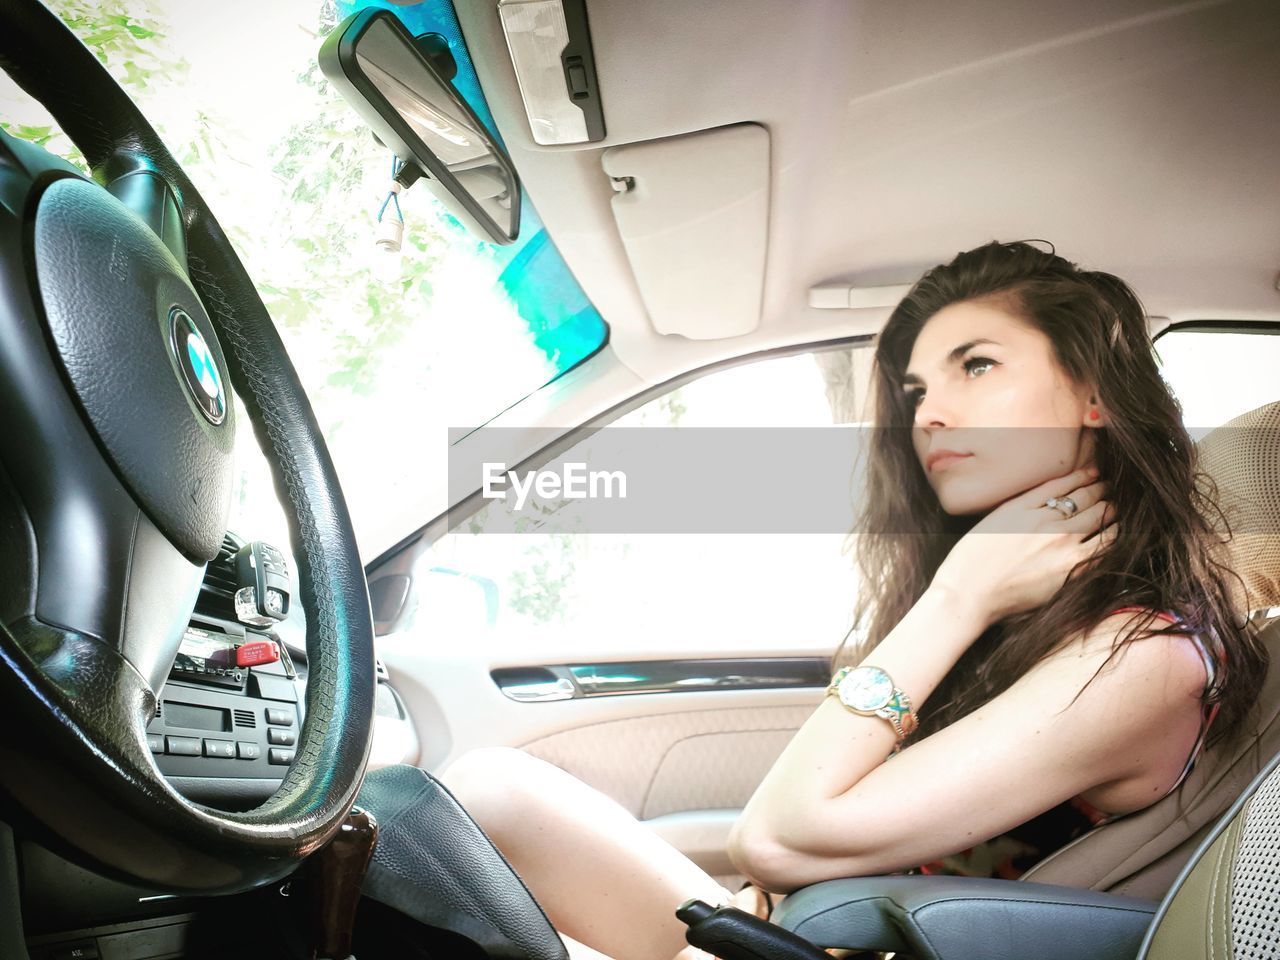 PORTRAIT OF WOMAN SITTING IN CAR